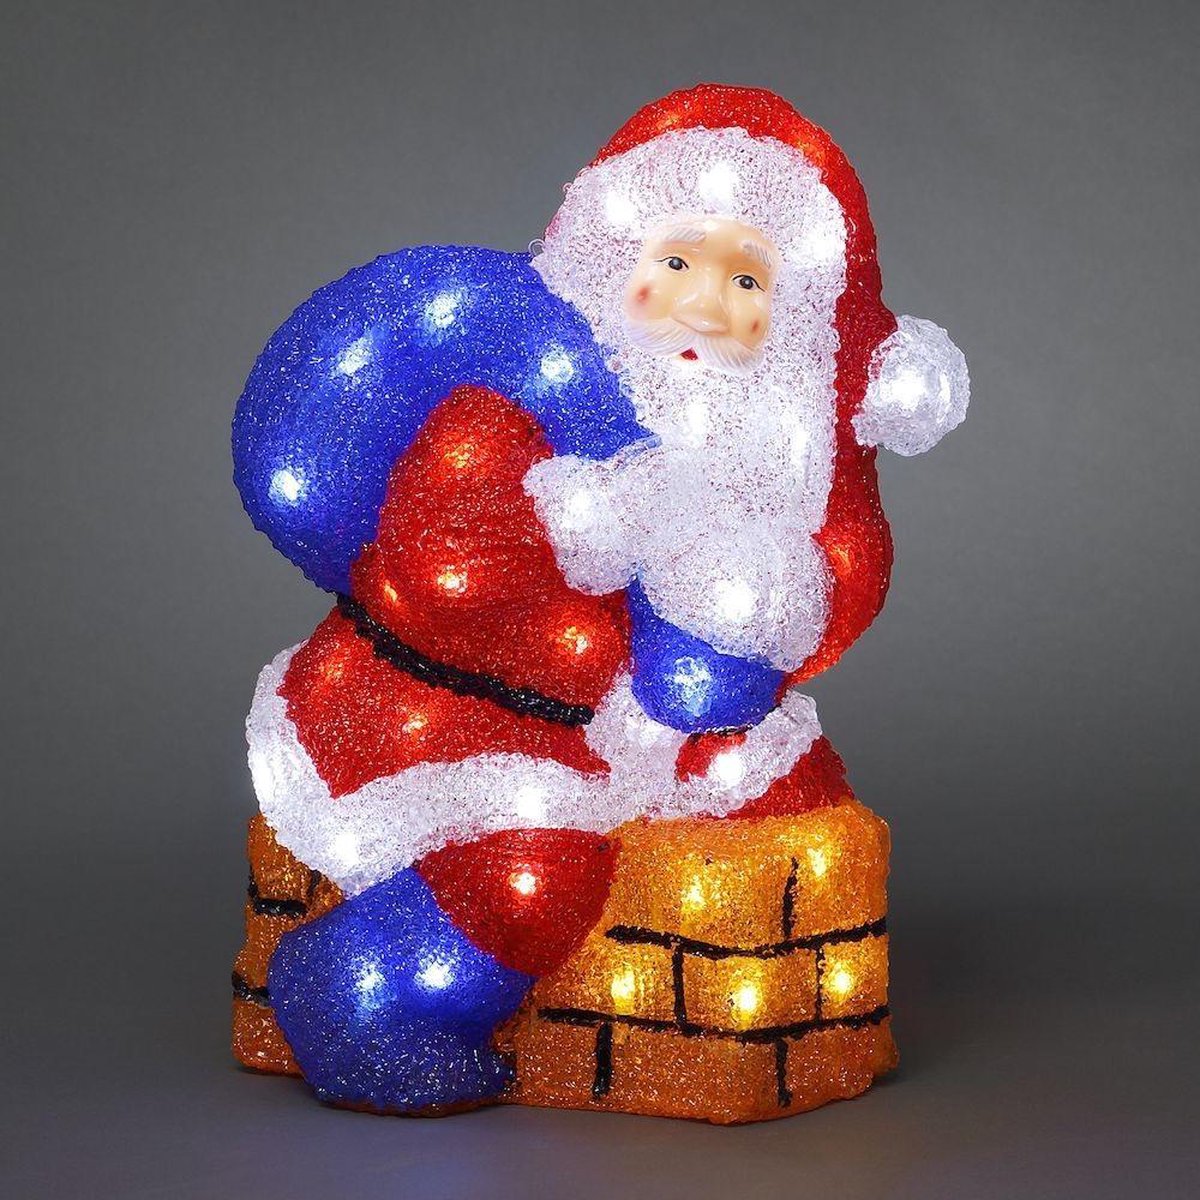 Konstsmide 6172 - Verlicht kerstfiguur - 48 lamps LED acryl kerstman op dak  - 27x37 cm... | bol